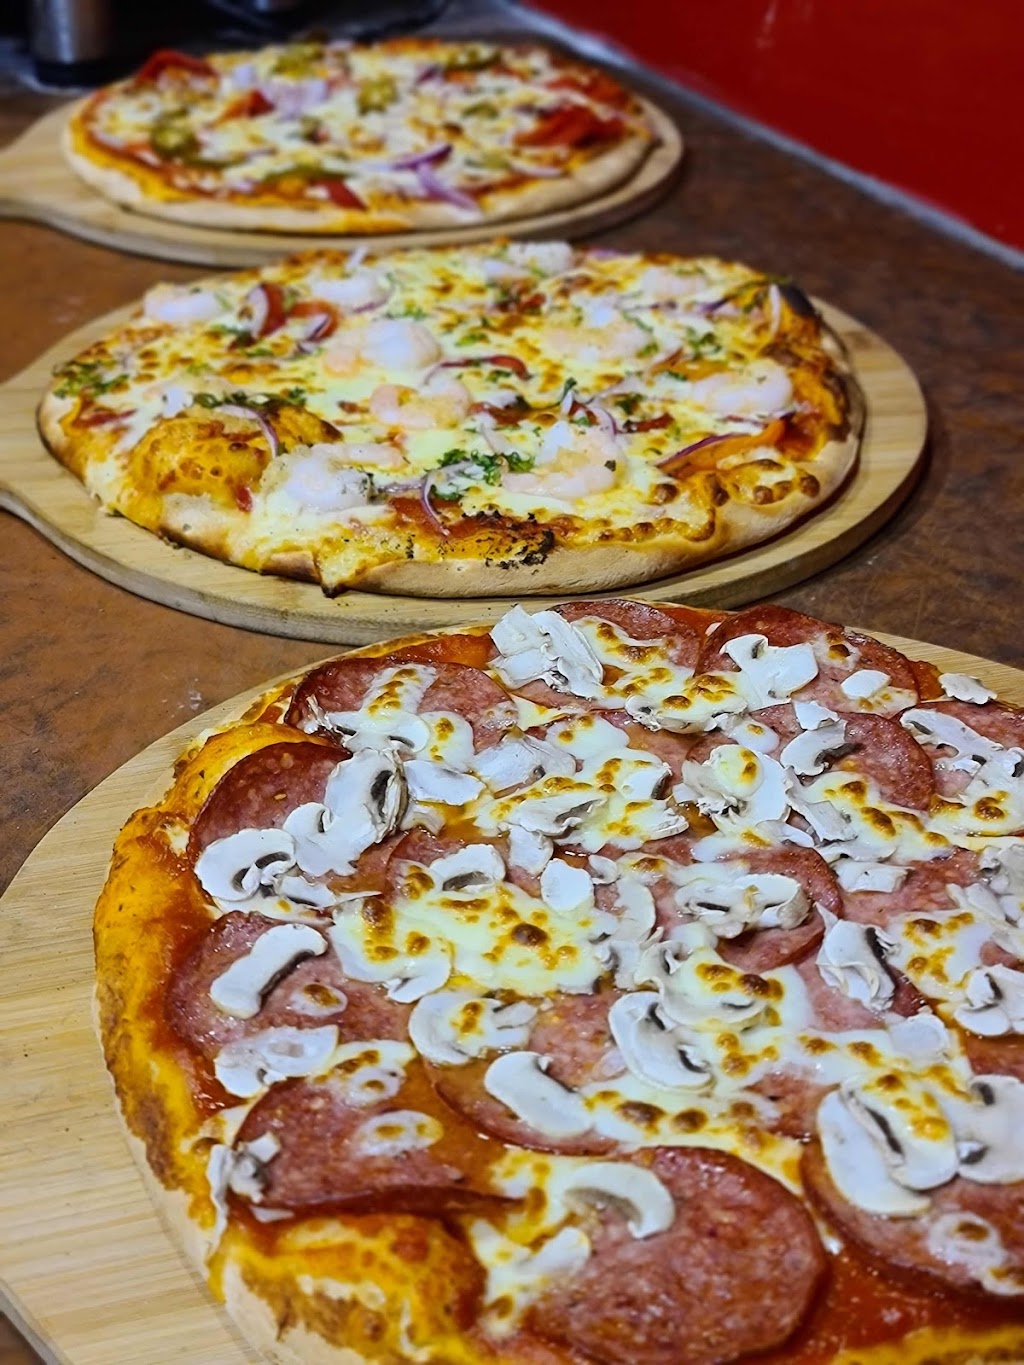 Belle Rose Wood Fired Pizza | restaurant | 85 Chadstone Rd, Malvern East VIC 3145, Australia | 0395685383 OR +61 3 9568 5383